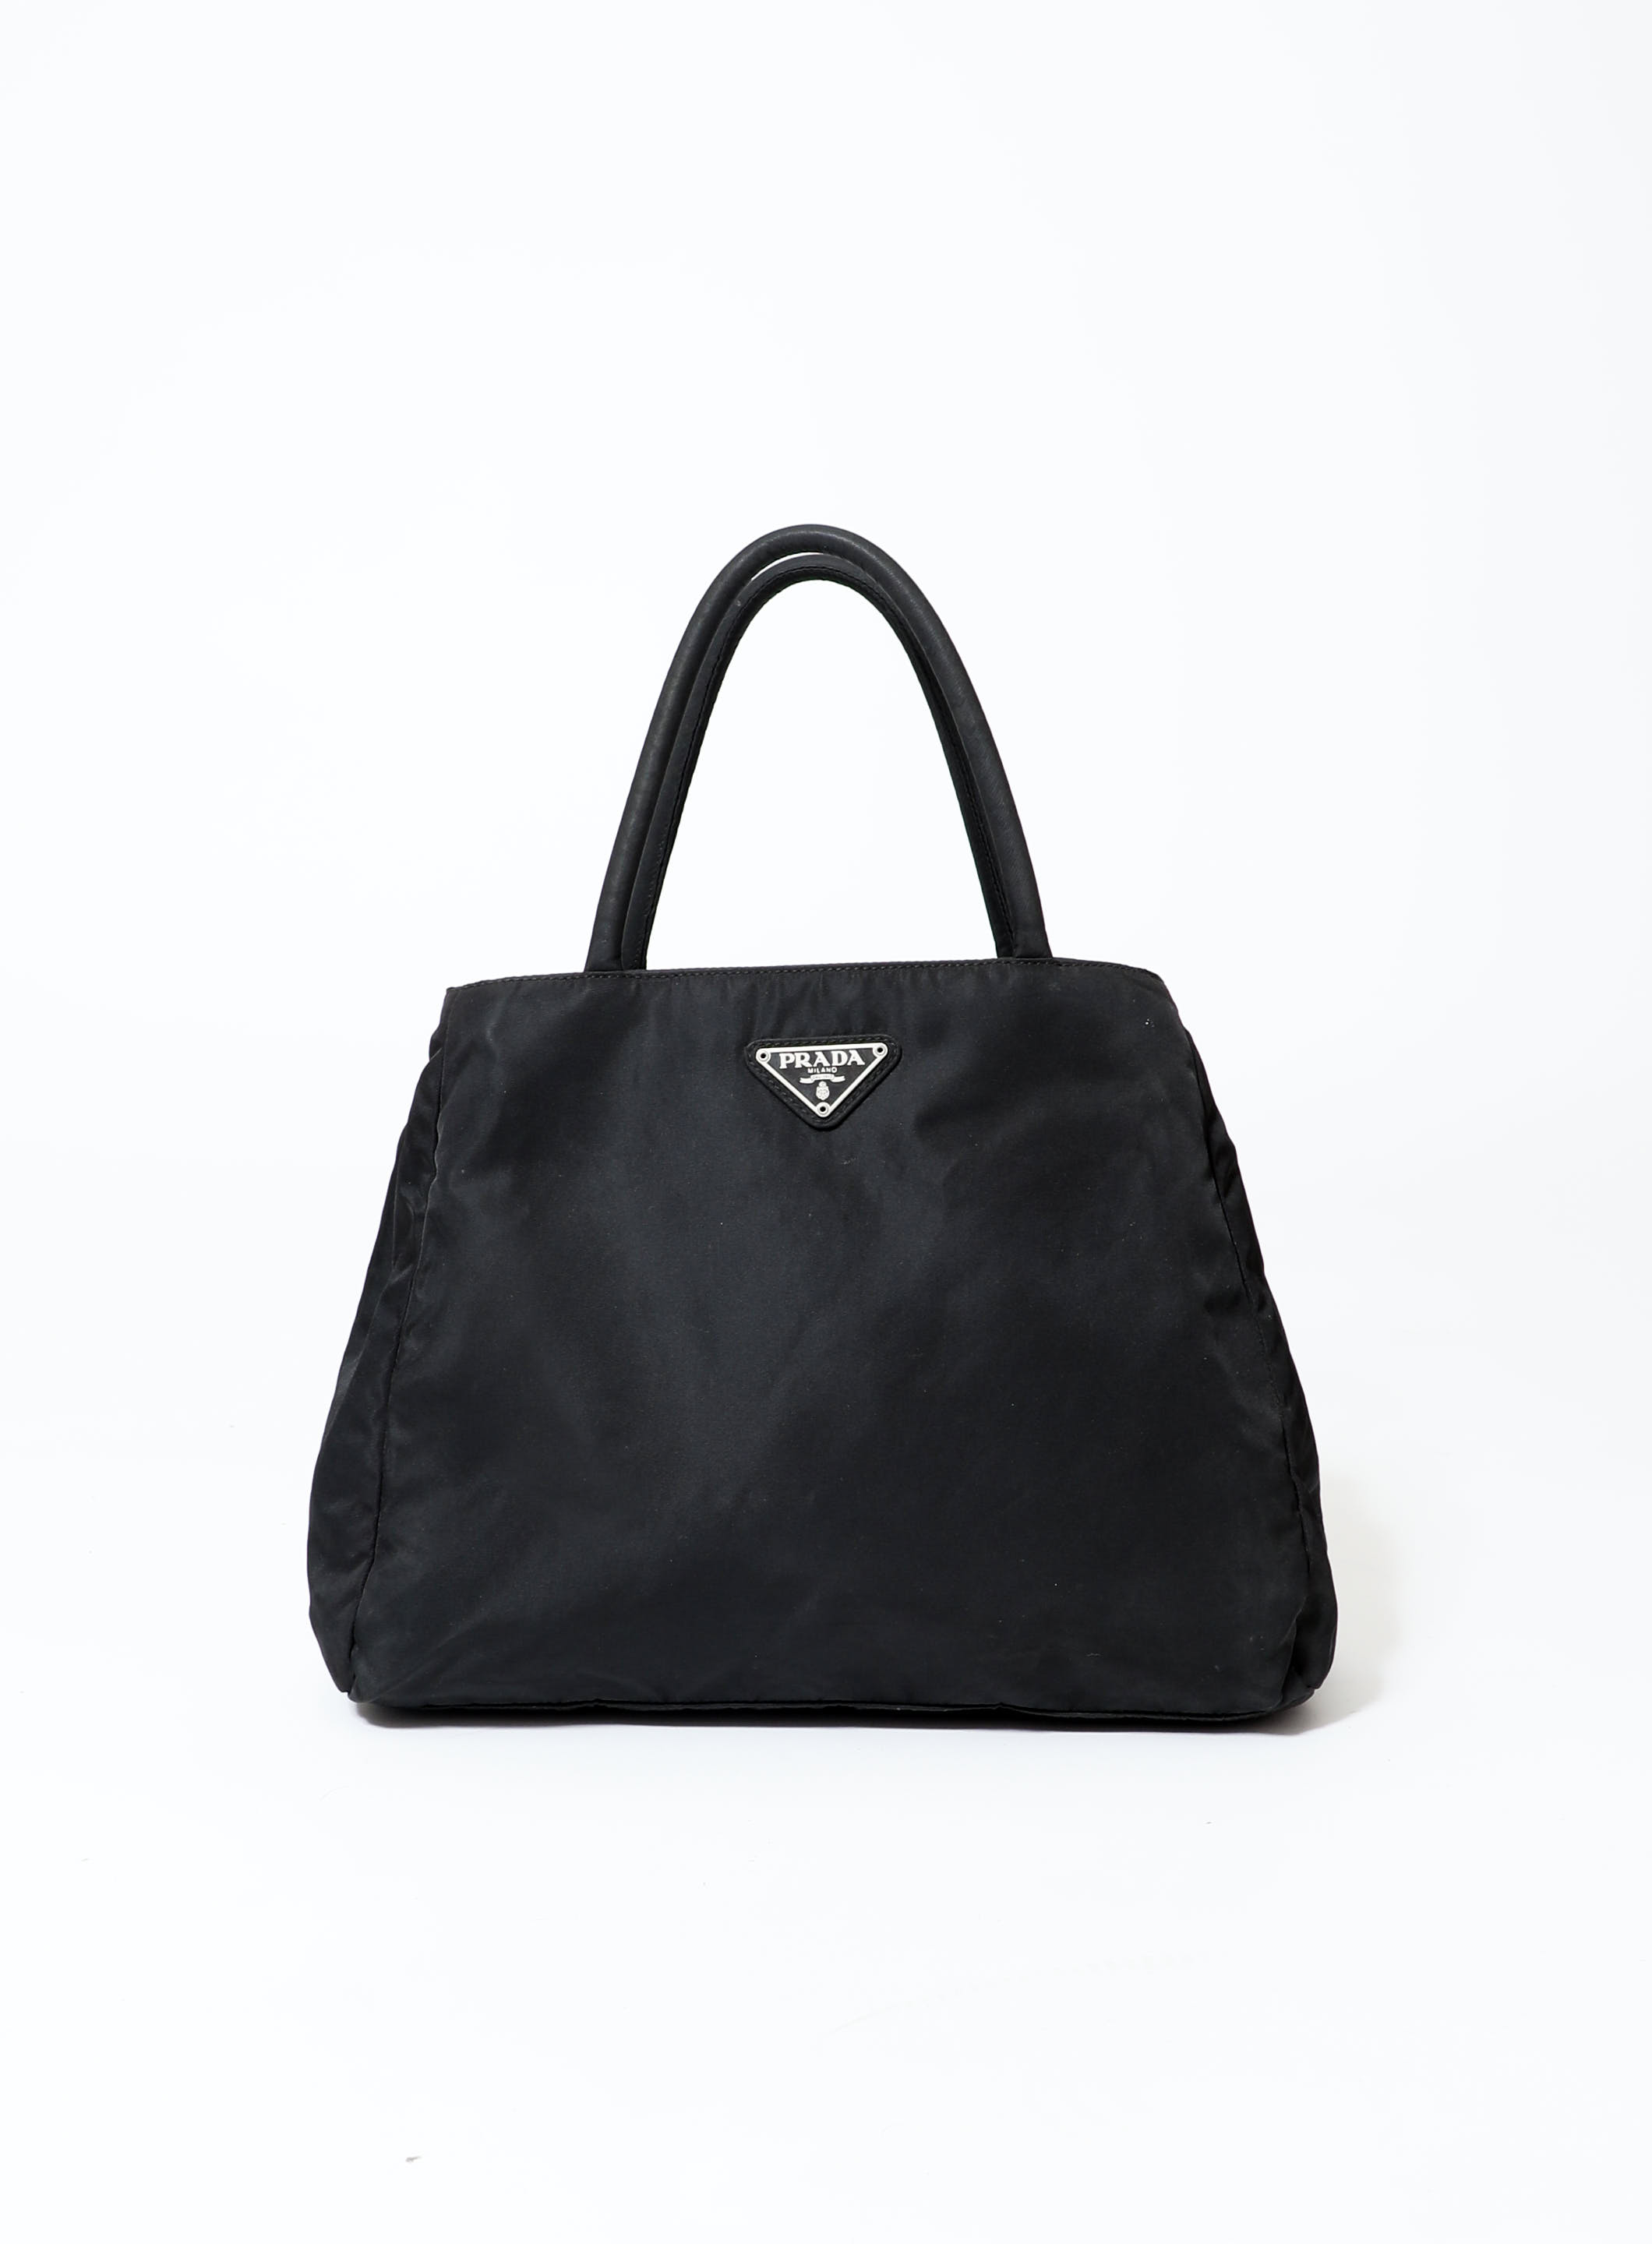 Prada, Bags, Vintage Authentic Prada Nylon Bag With Leather Details